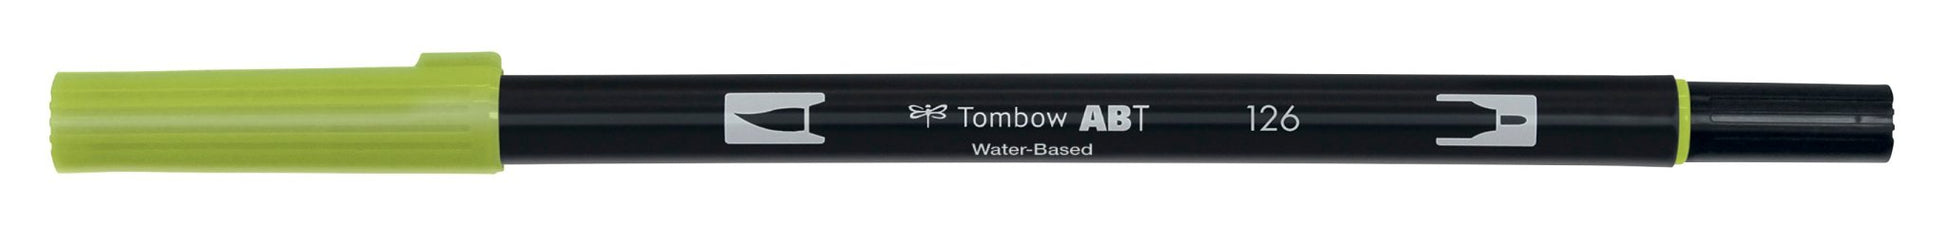 Tombow ABT dual brush pen - single colours - Tombow - Light olive ABT-126 - millenotes